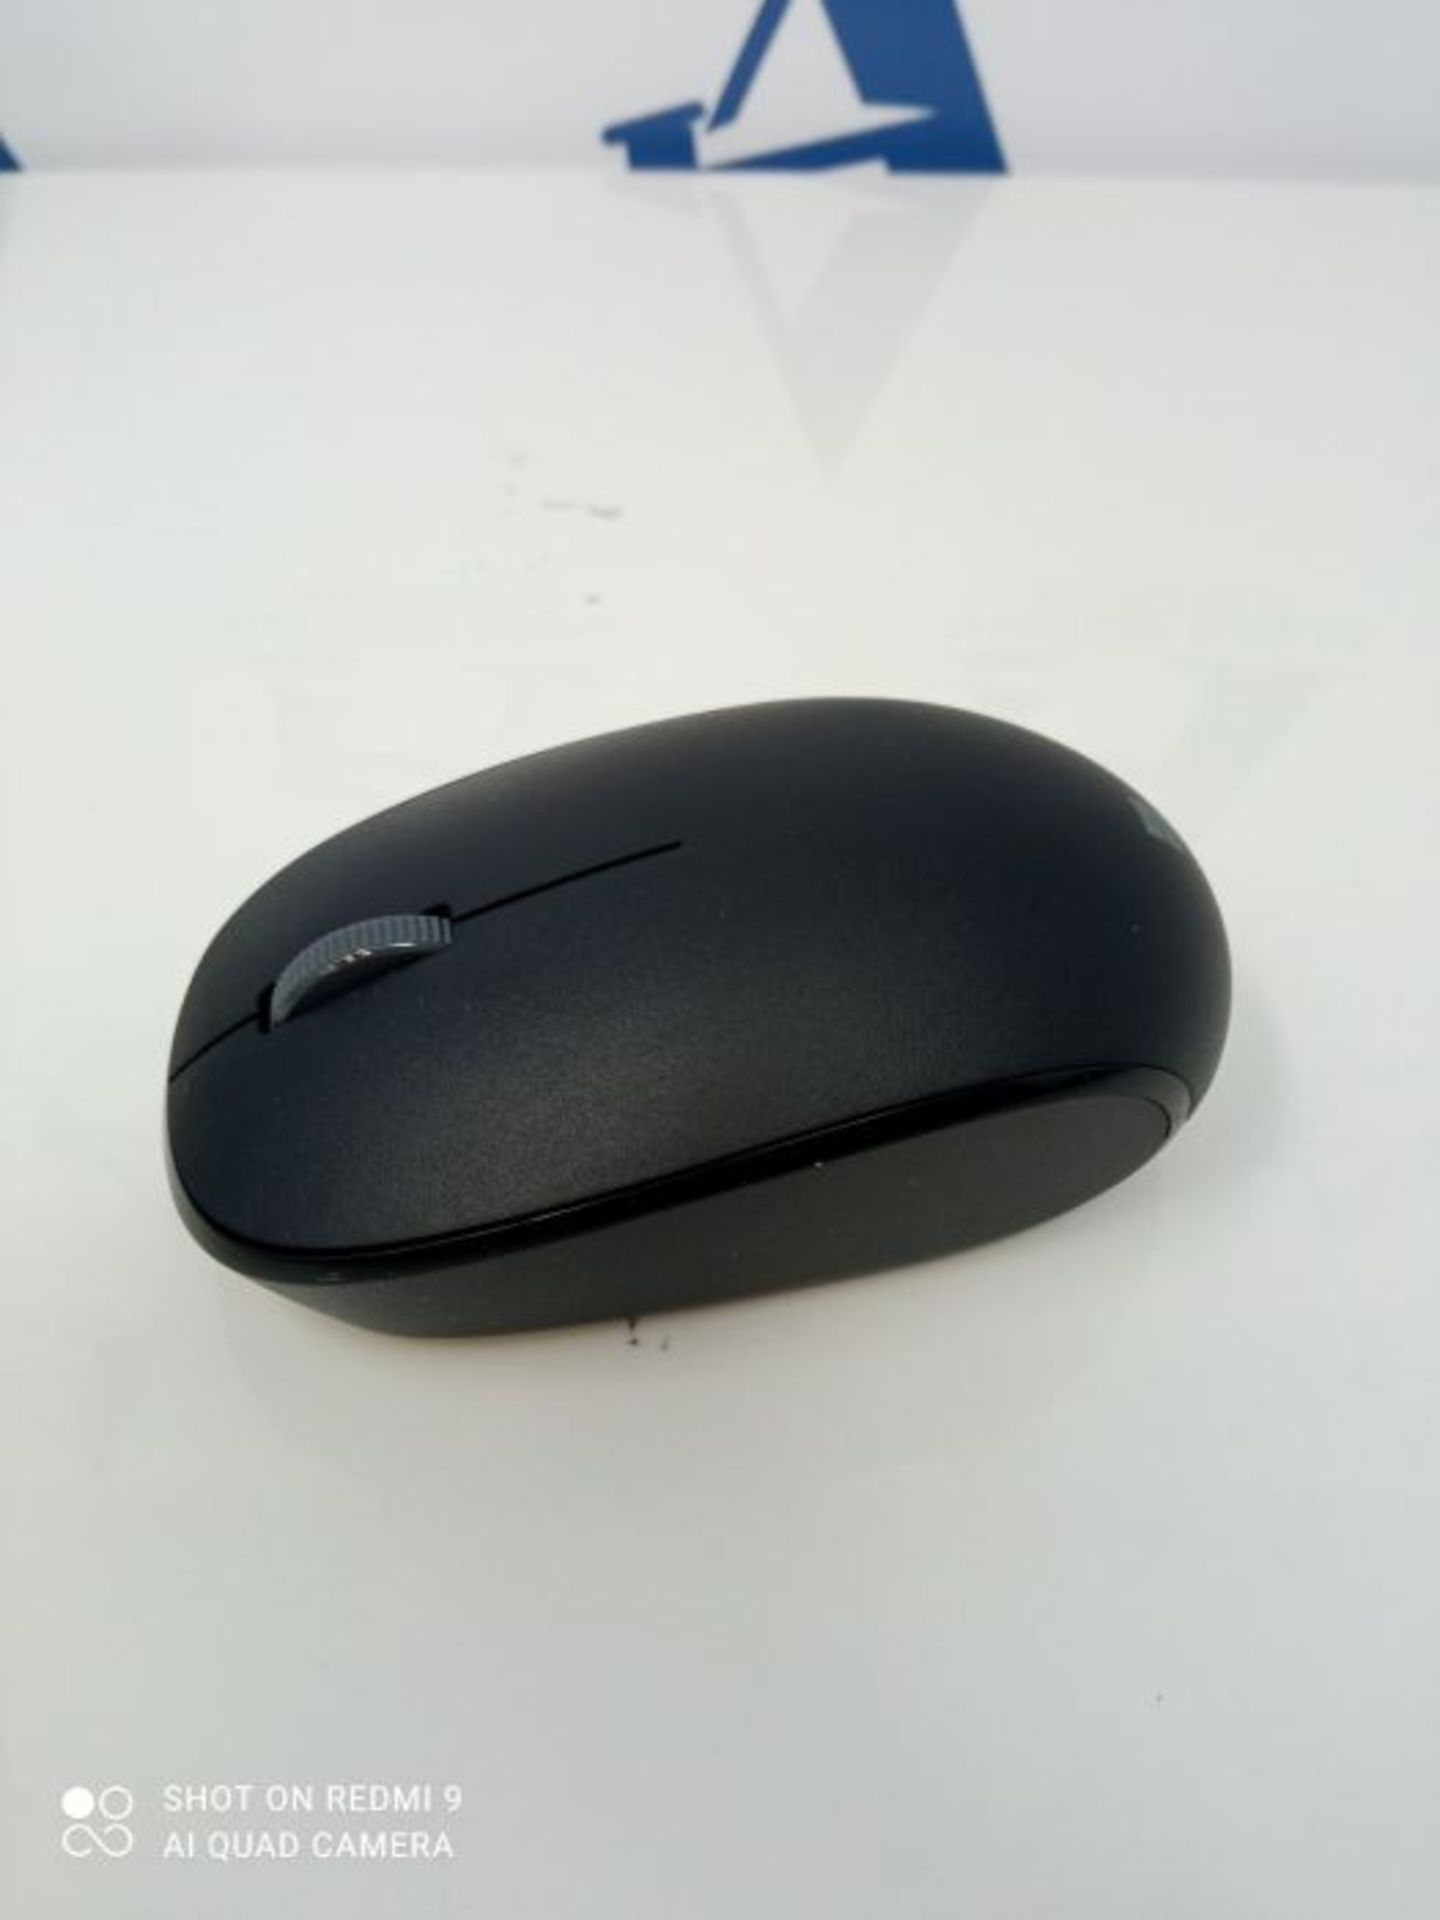 Microsoft RJN-00002 Bluetooth Mouse - Black - Image 3 of 3